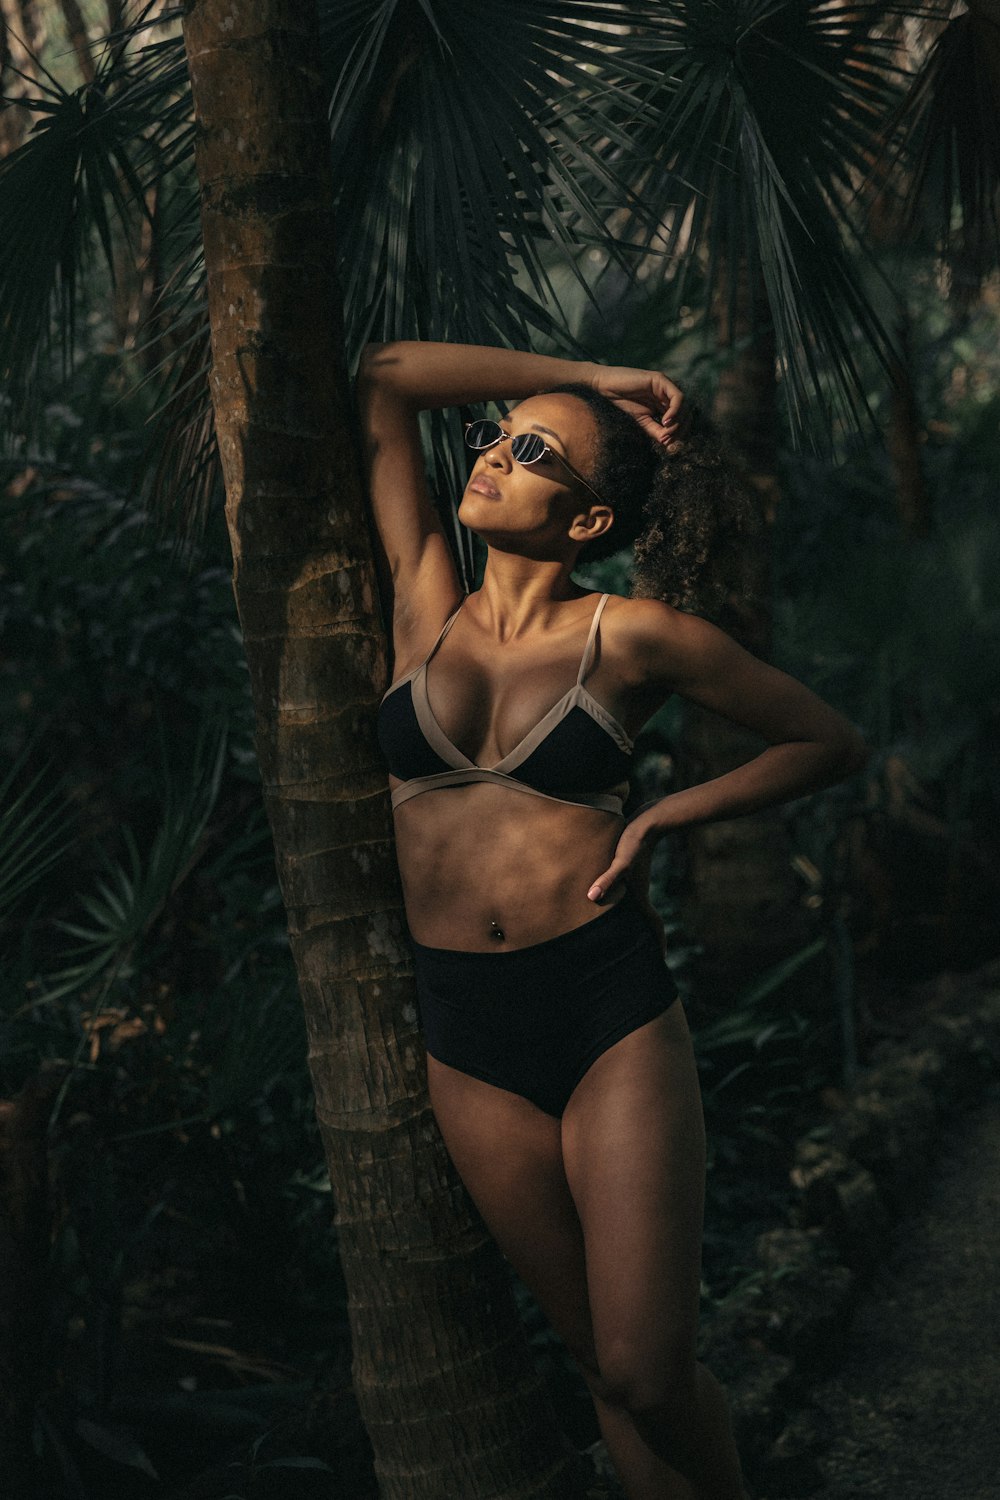 woman in black bikini leaning on coconut tree trunk